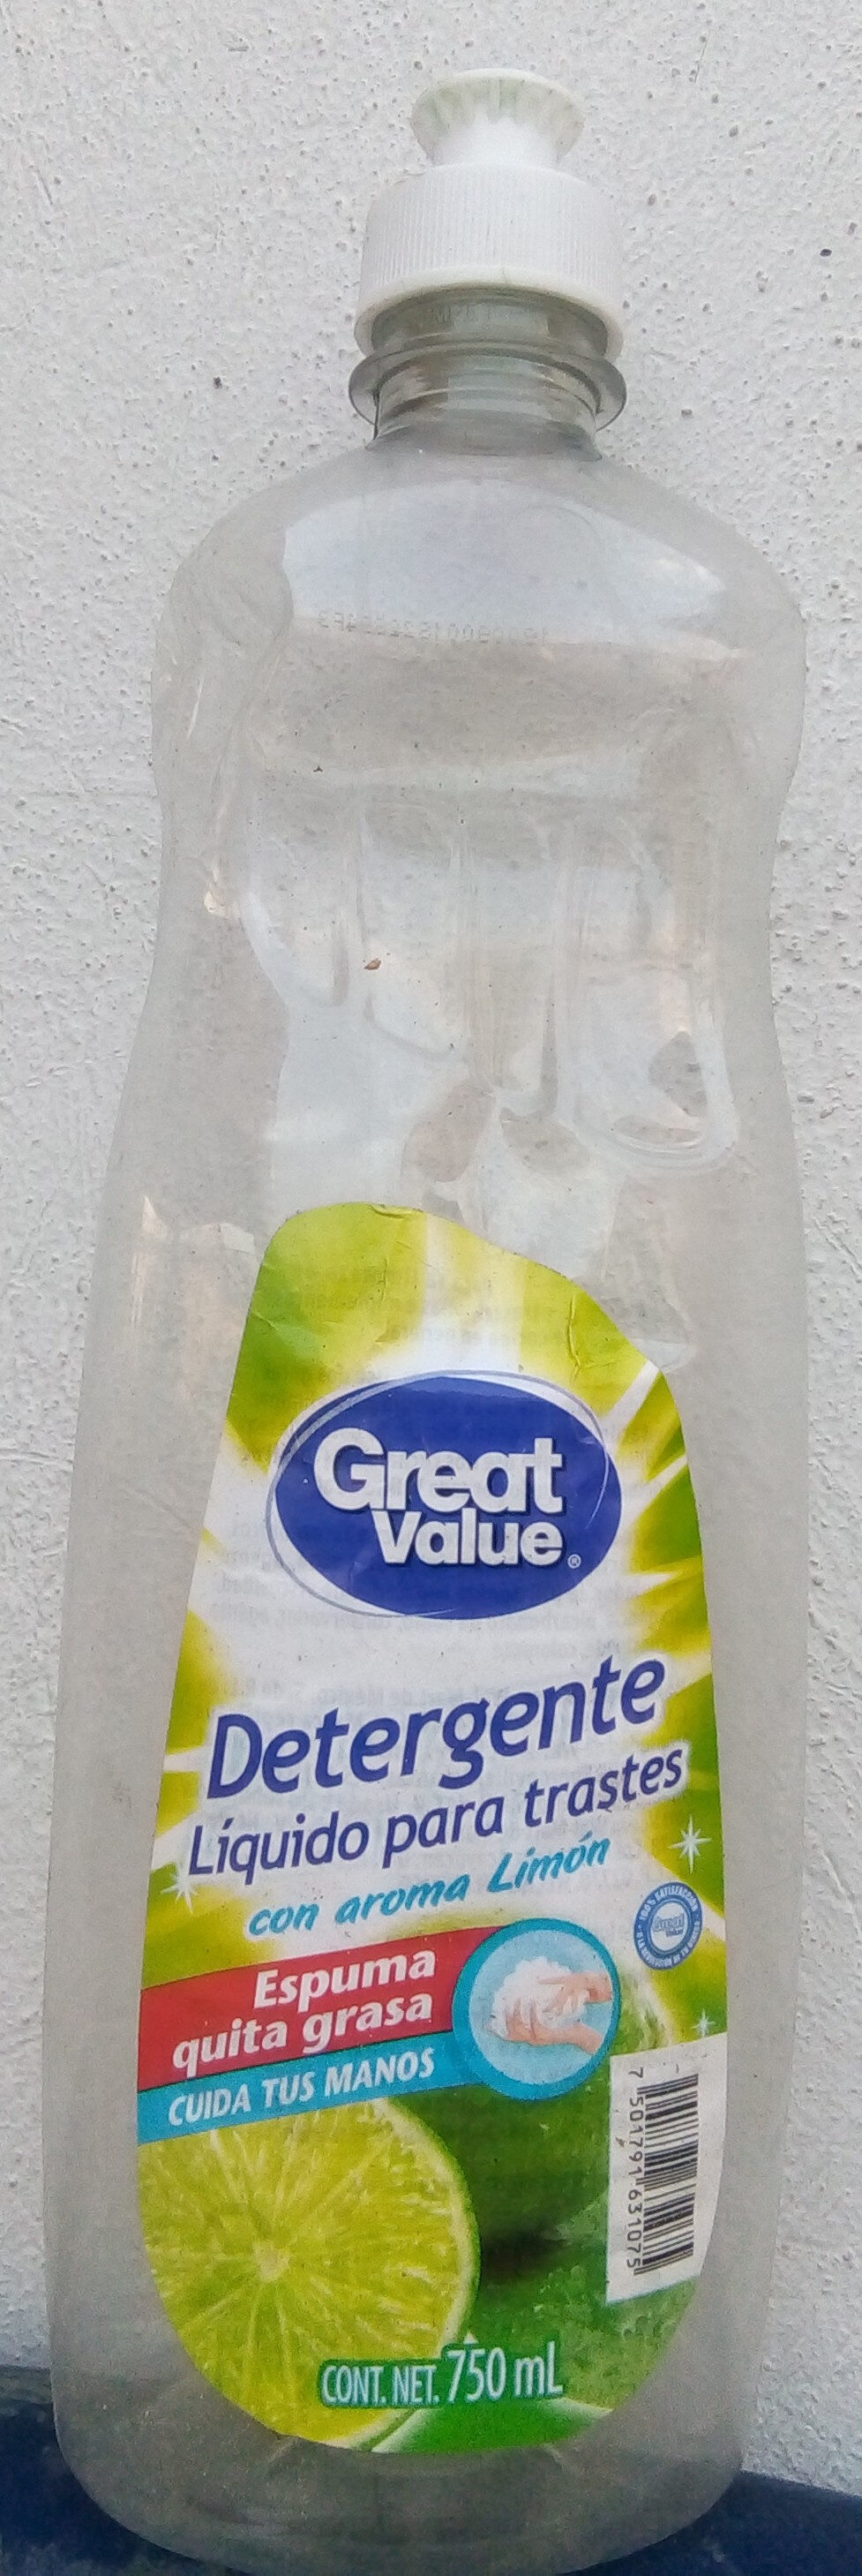 Detergente liquido para trastes - Product - es